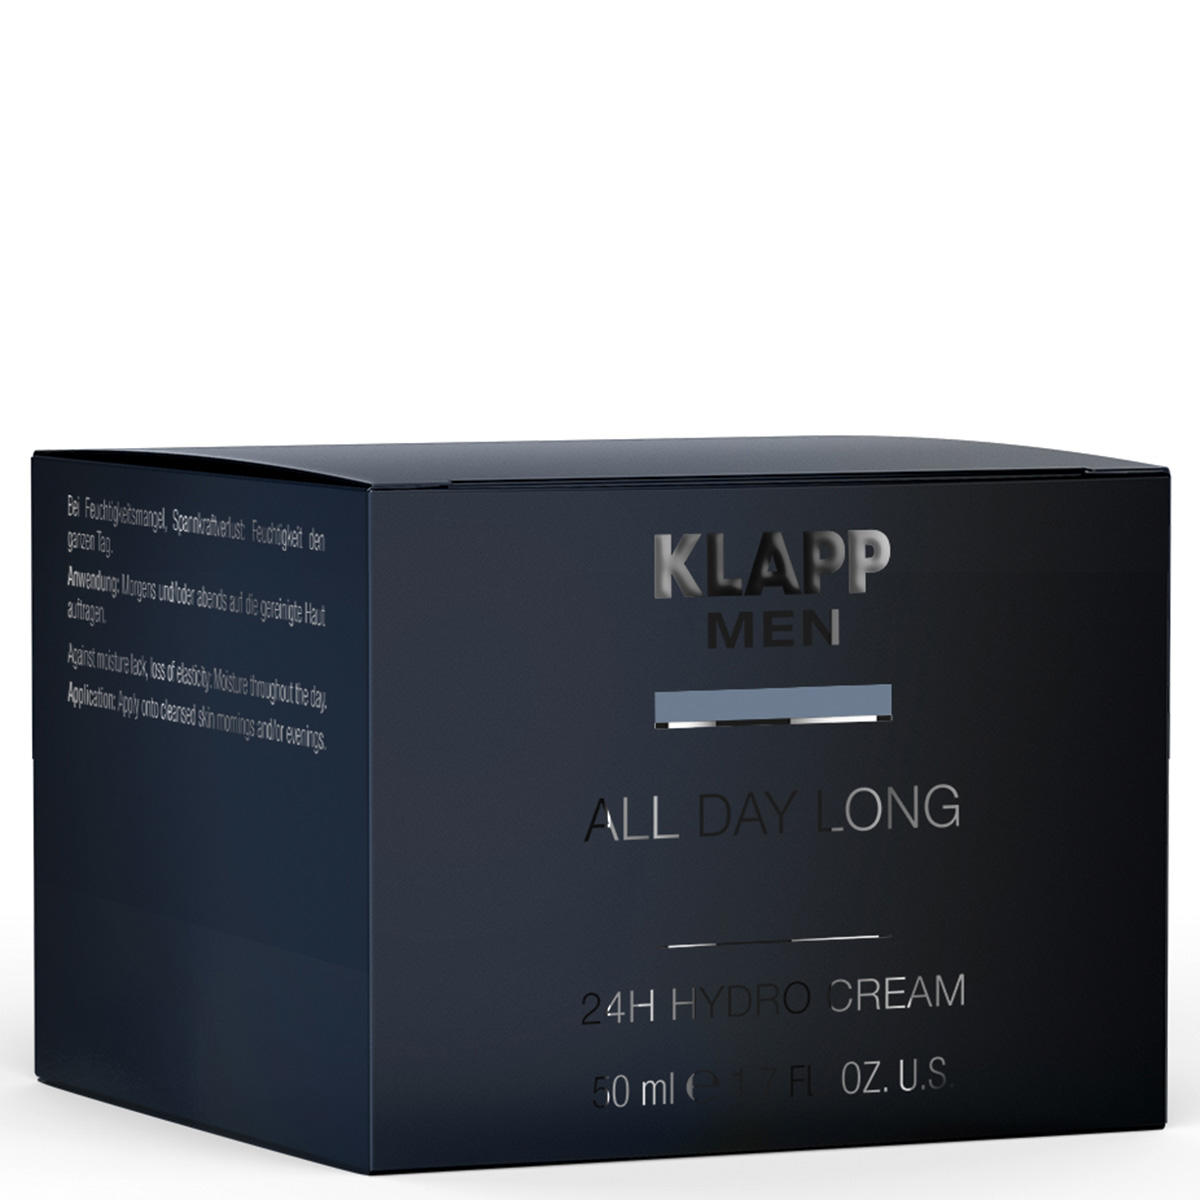 KLAPP MEN All Day Long - 24H Hydro Cream 50 ml - 2